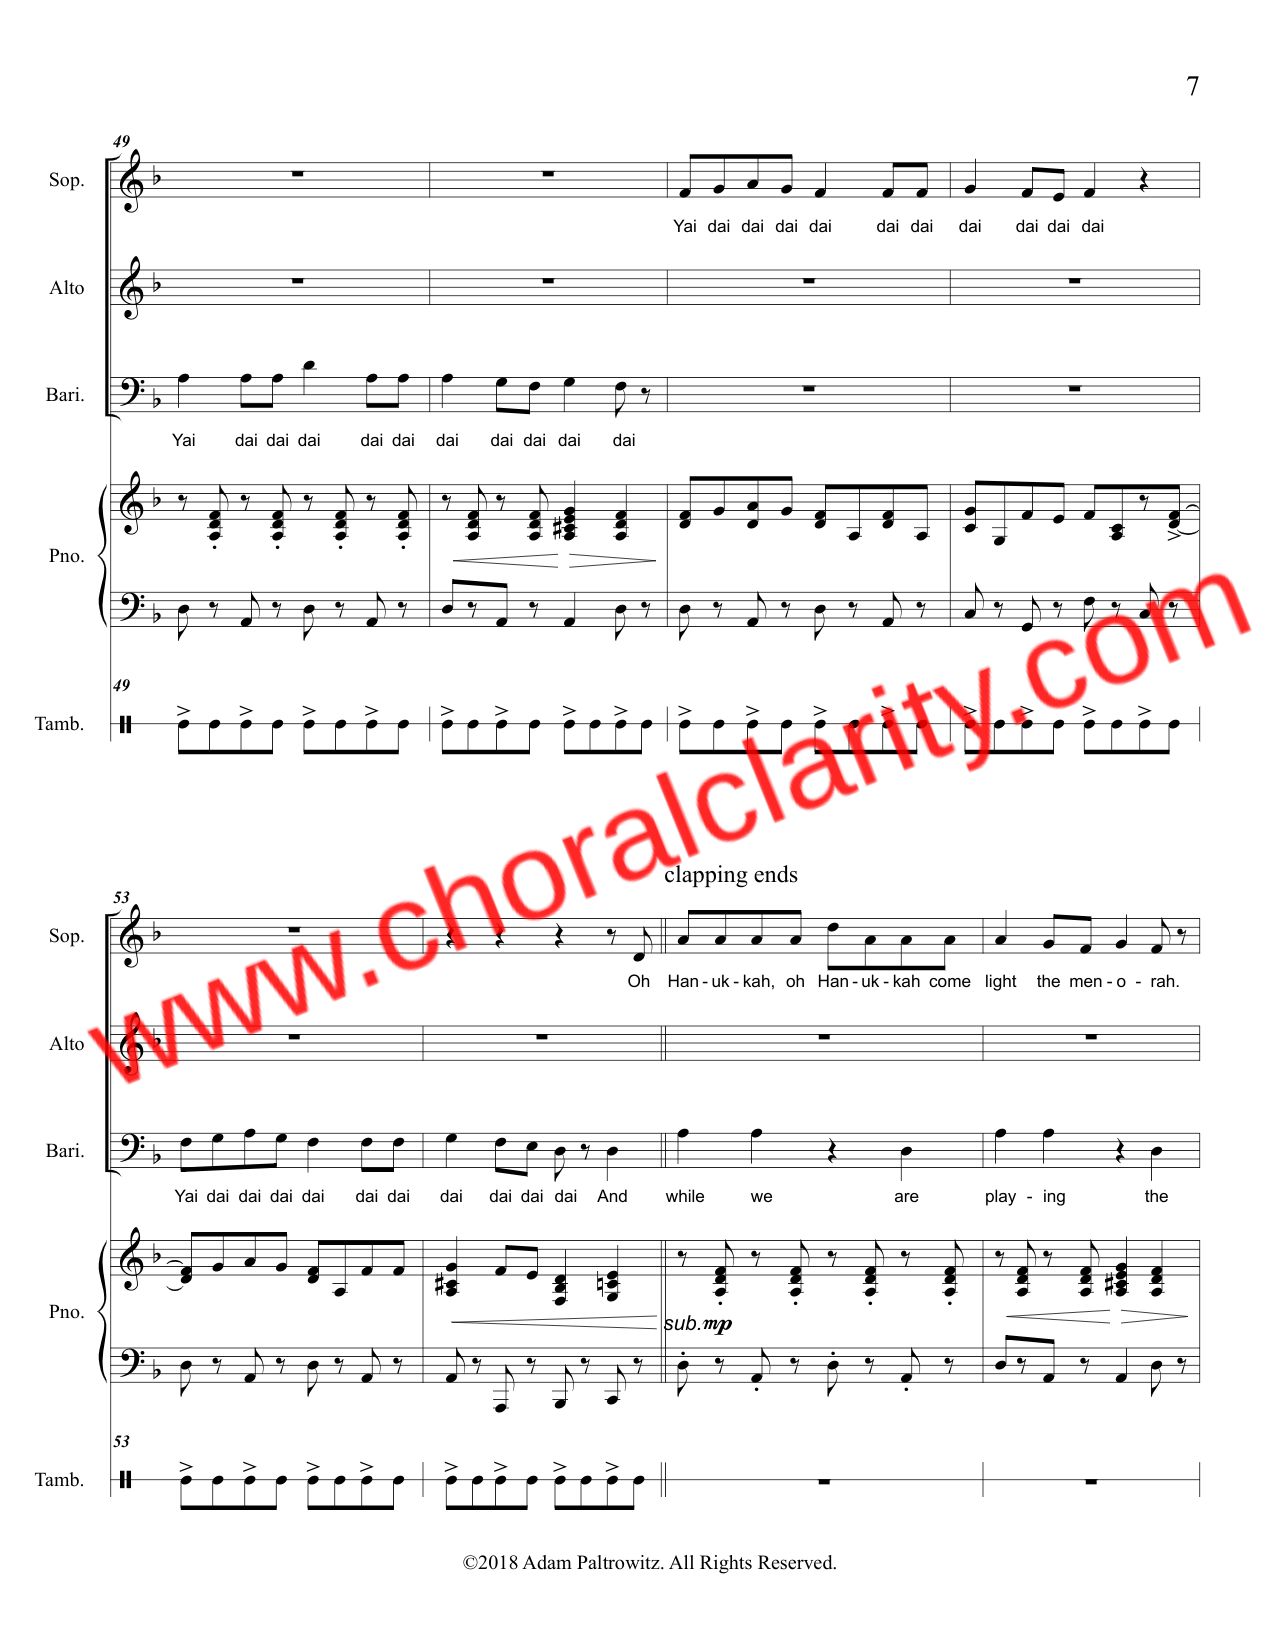 Choral Clarity WatermarkOh Hanukkah SAB-7